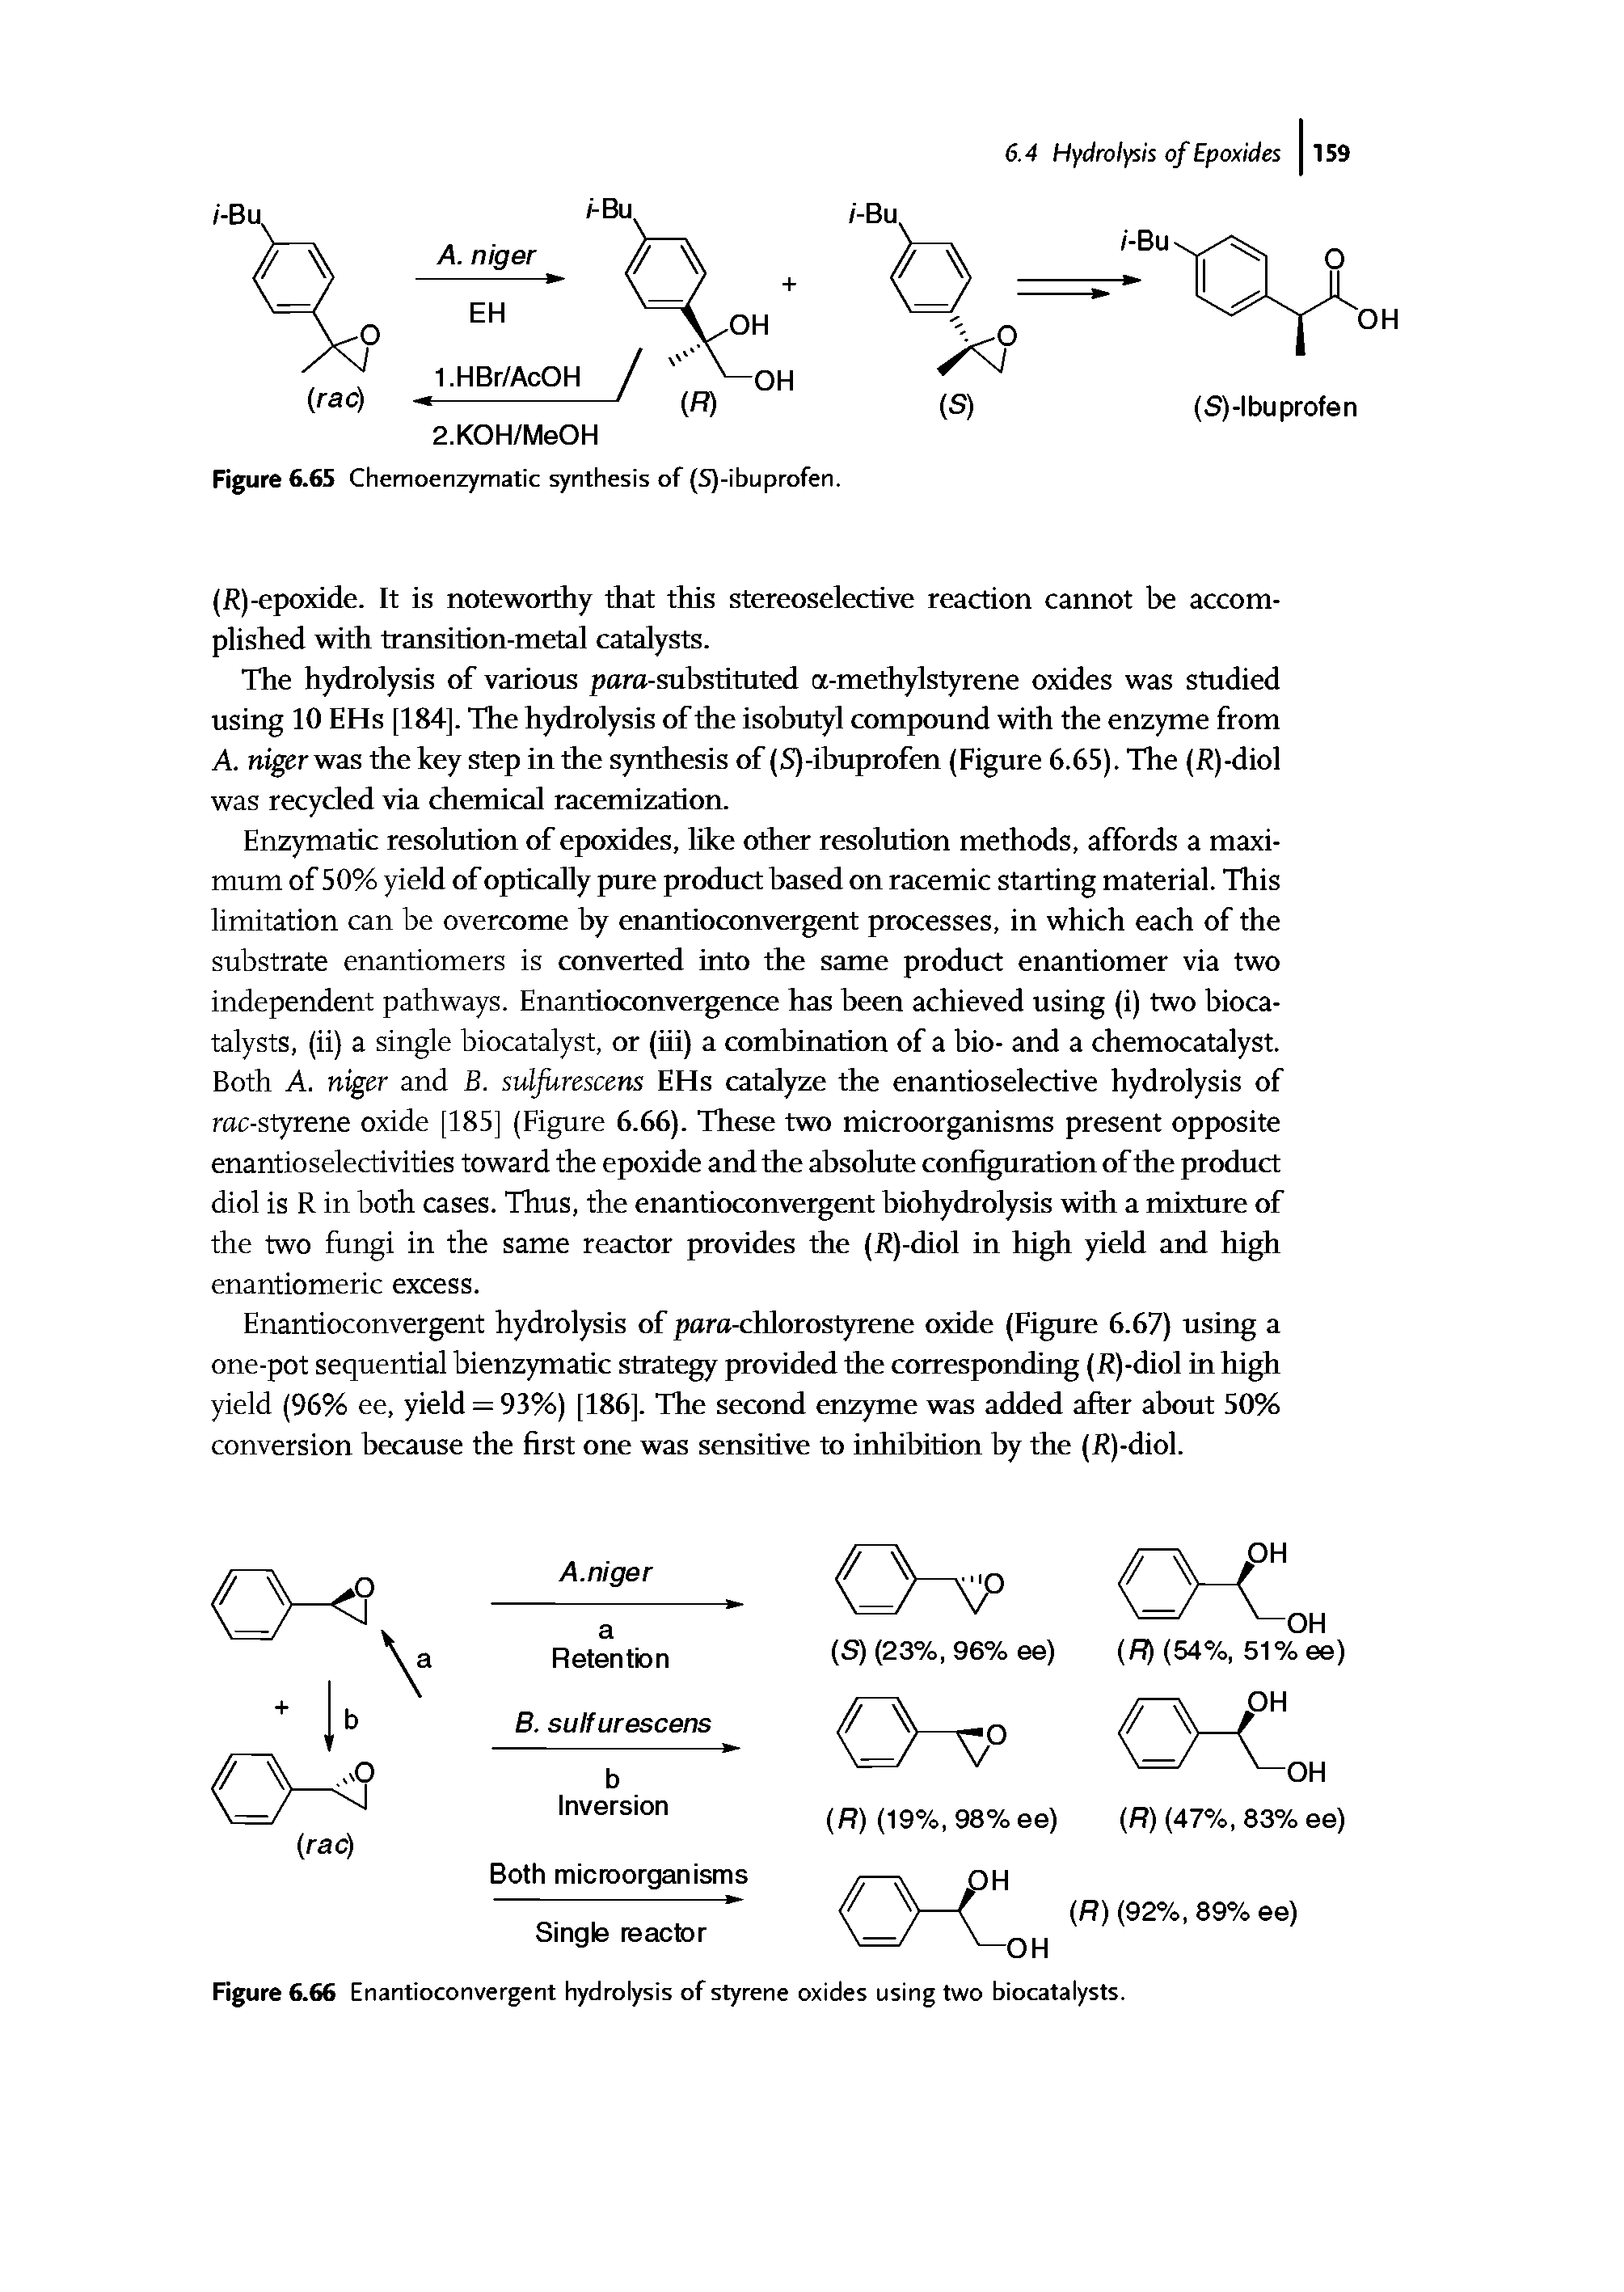 Figure 6.66 Enantioconvergent hydrolysis of styrene oxides using two biocatalysts.